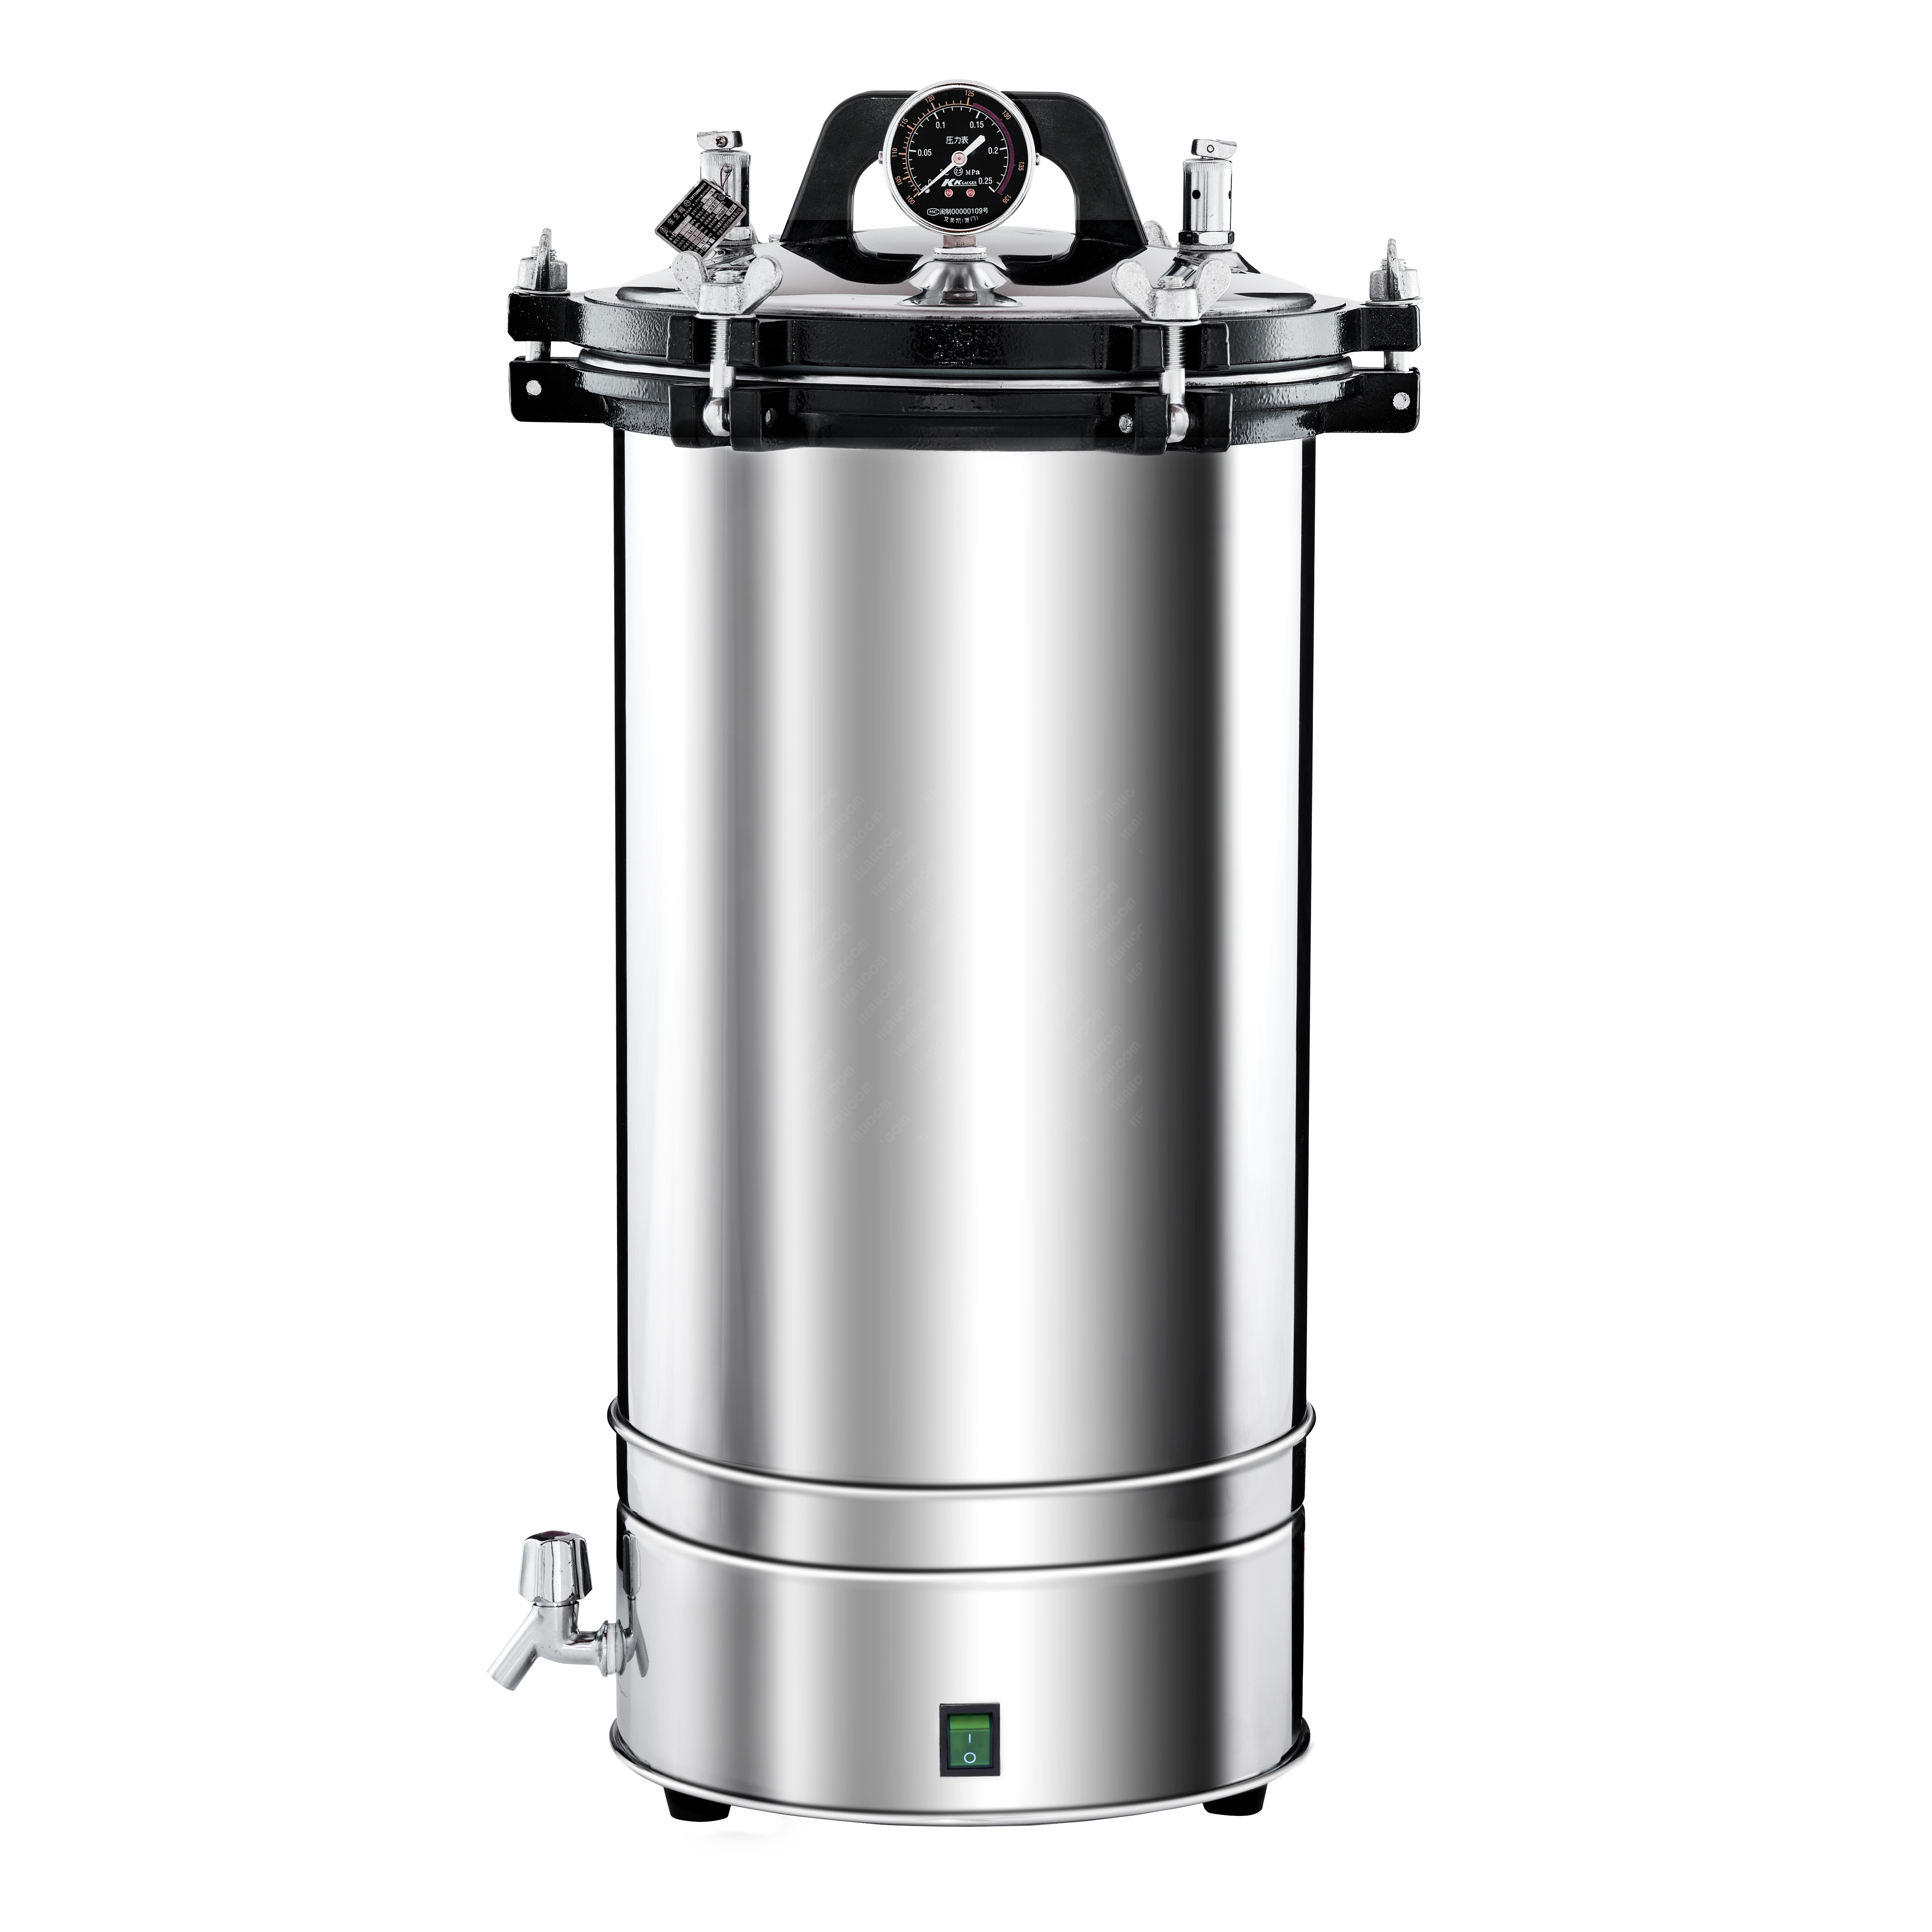  YX-B 18L 24L 30L Portable Stainless Steel Pressure Steam Autoclave Sterilizer